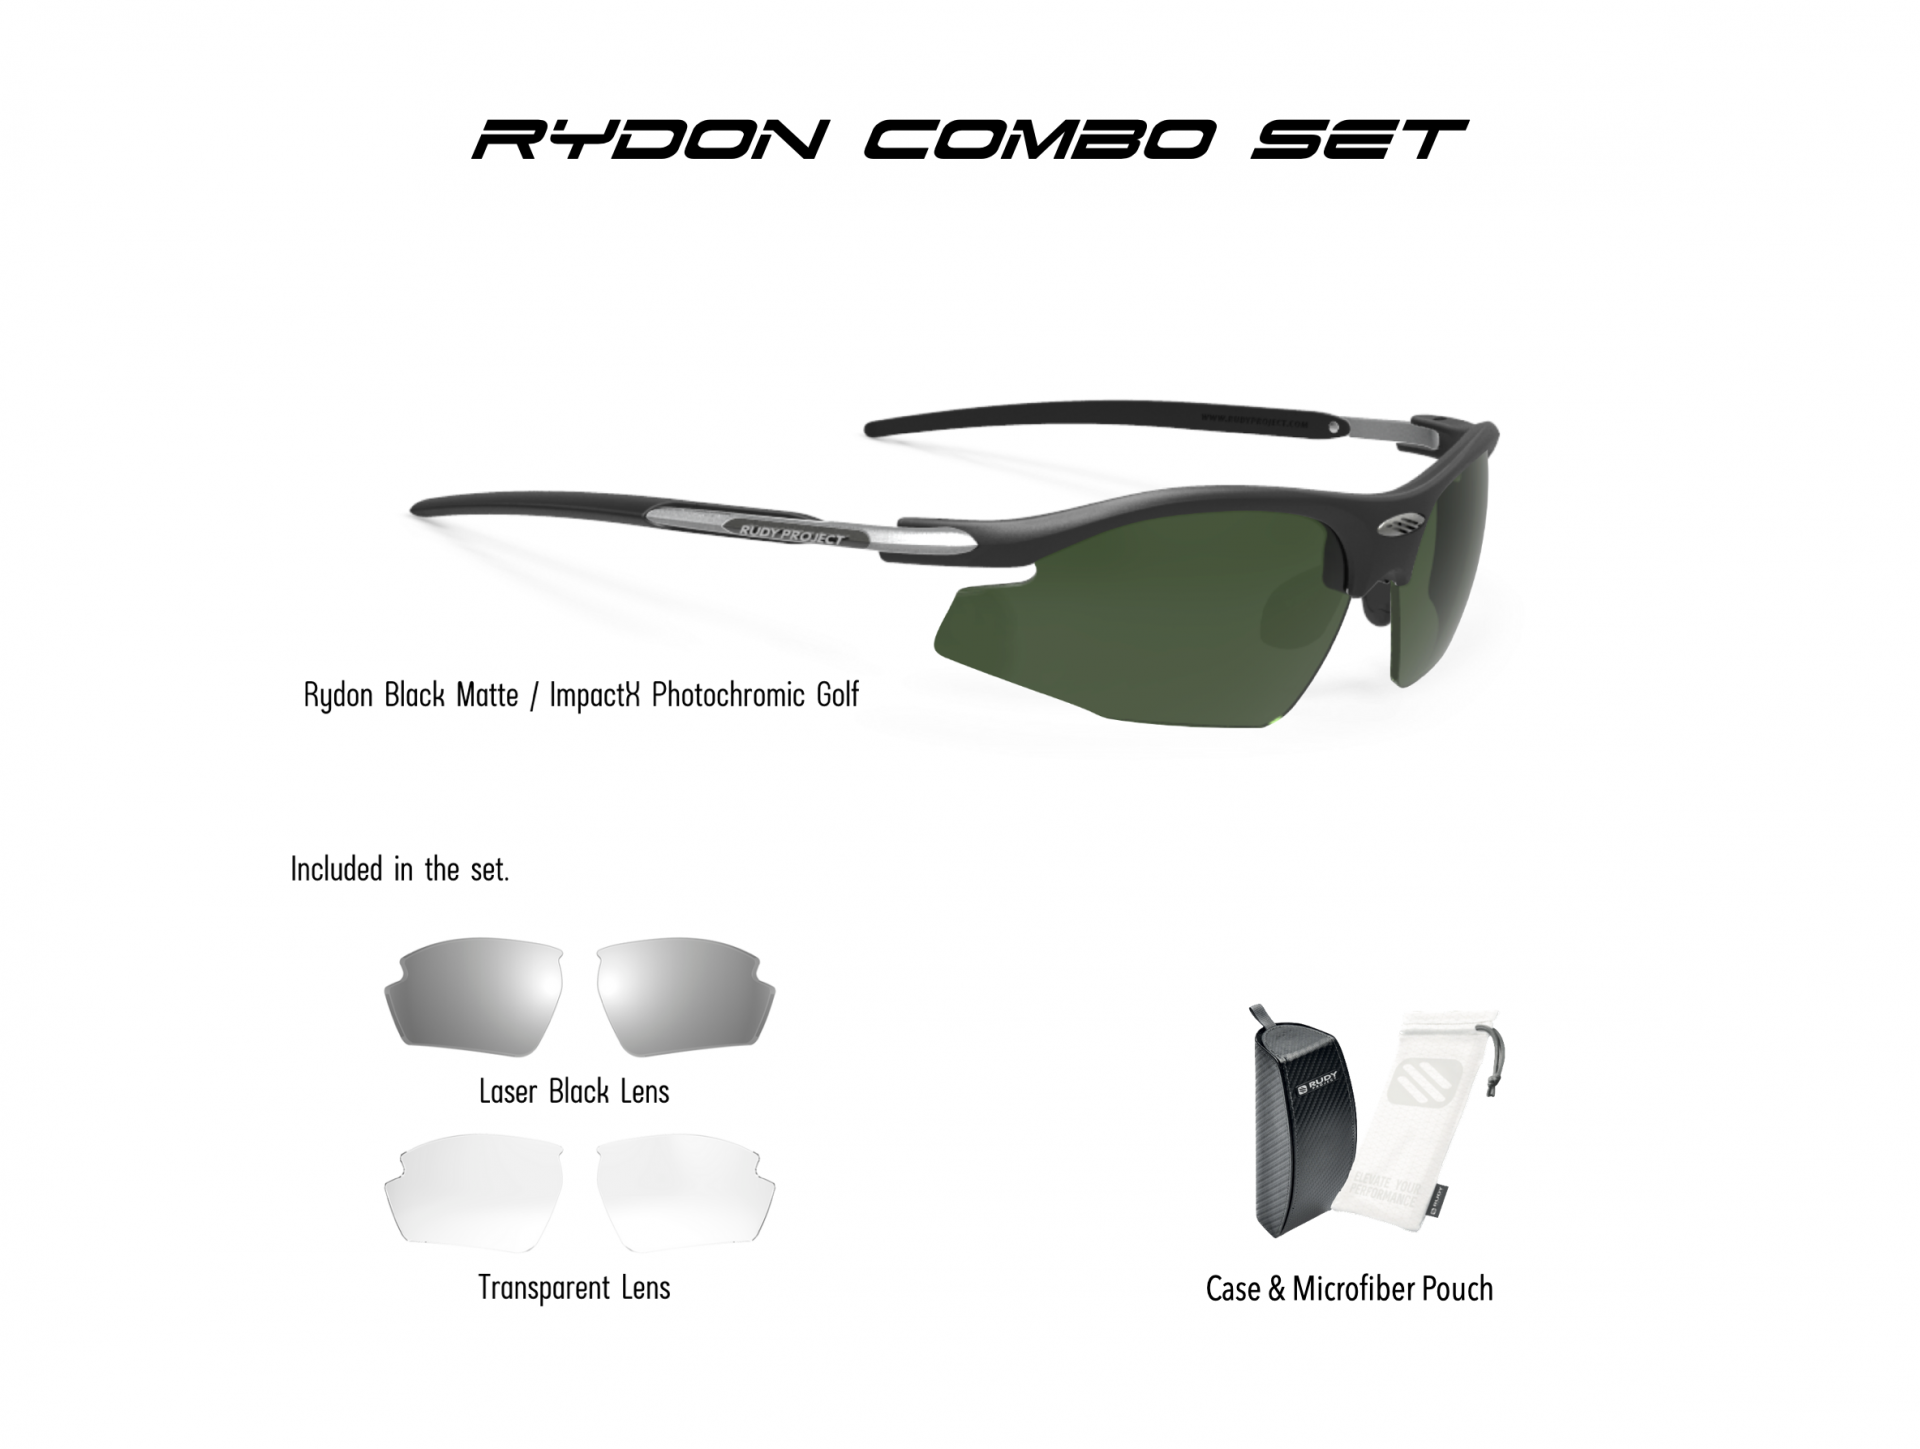 Rydon Black Matte / ImpactX Photochromic Golf Combo Set